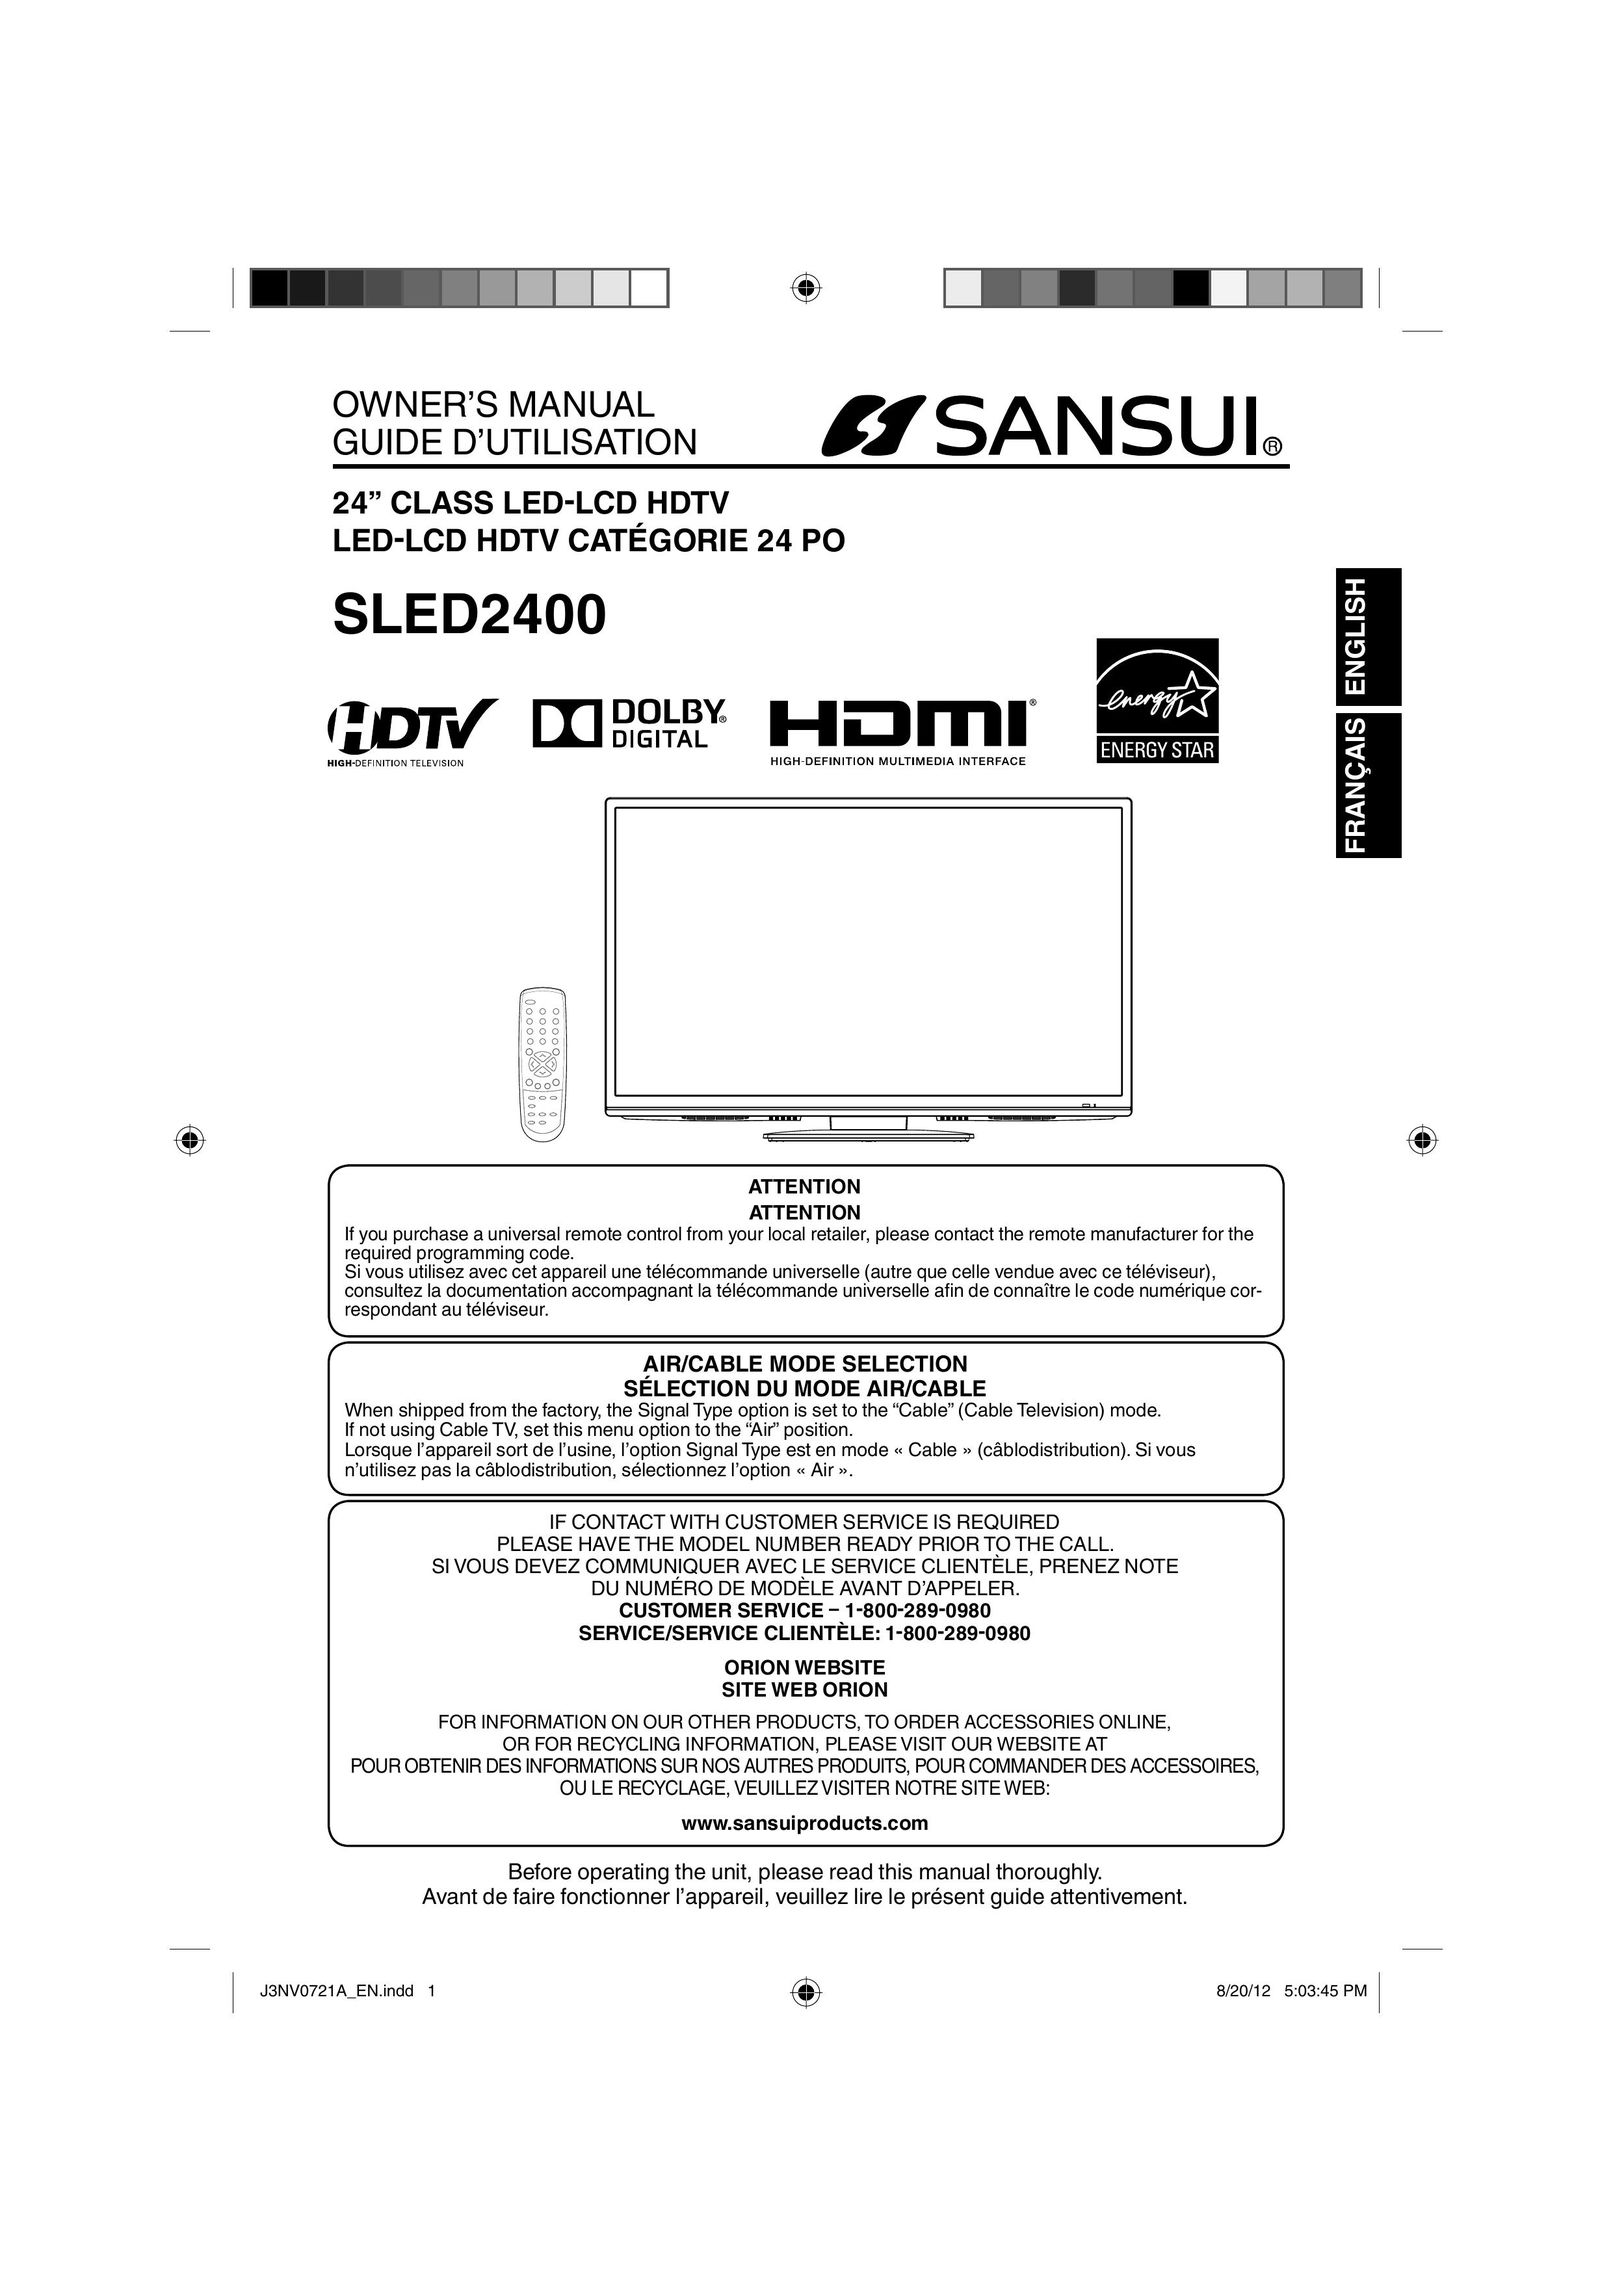 Sansui SLED2400 Flat Panel Television User Manual